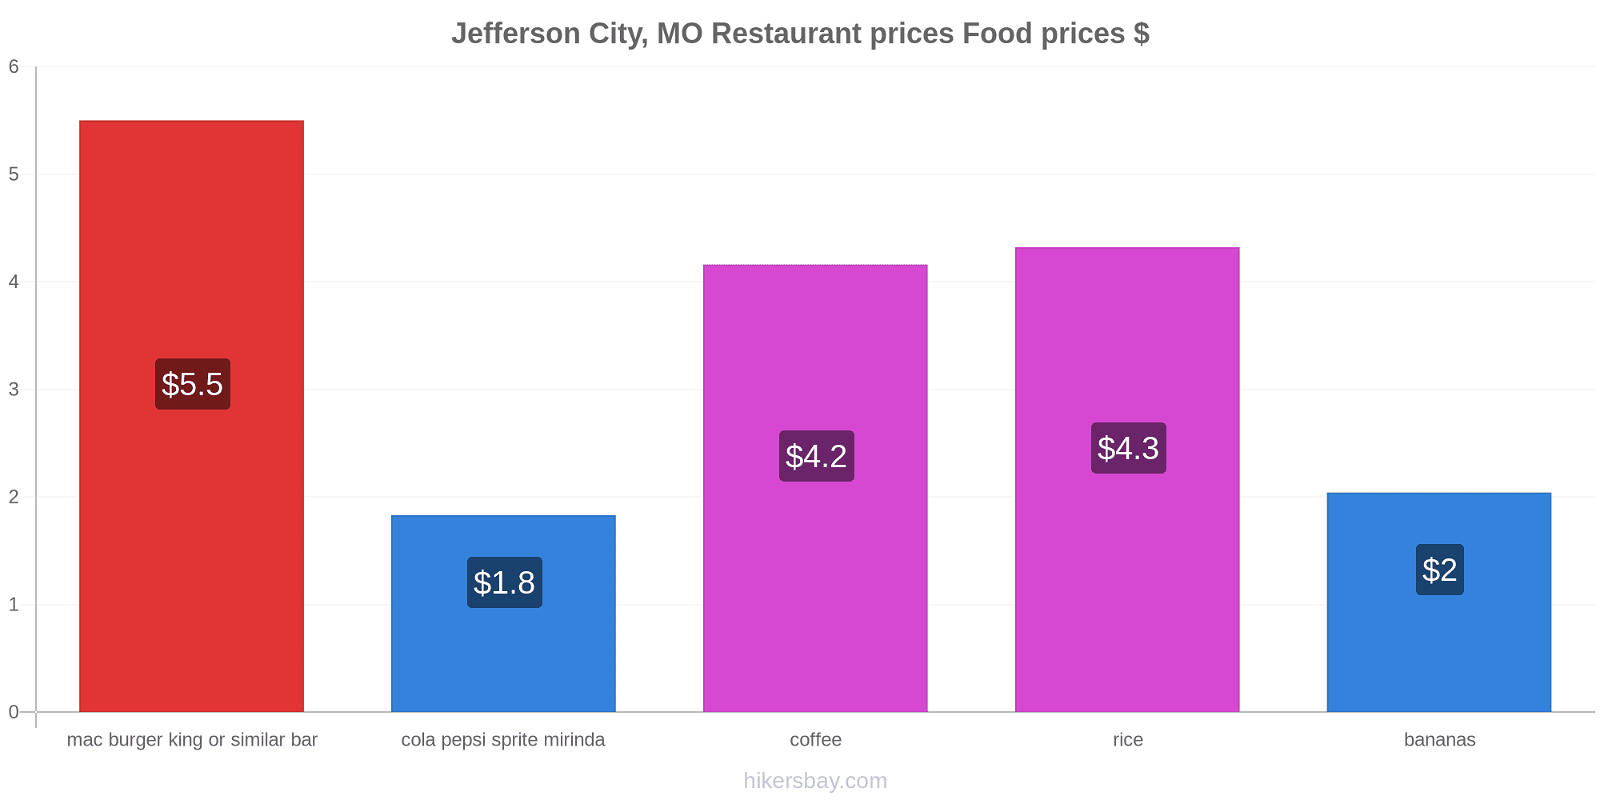 Jefferson City, MO price changes hikersbay.com